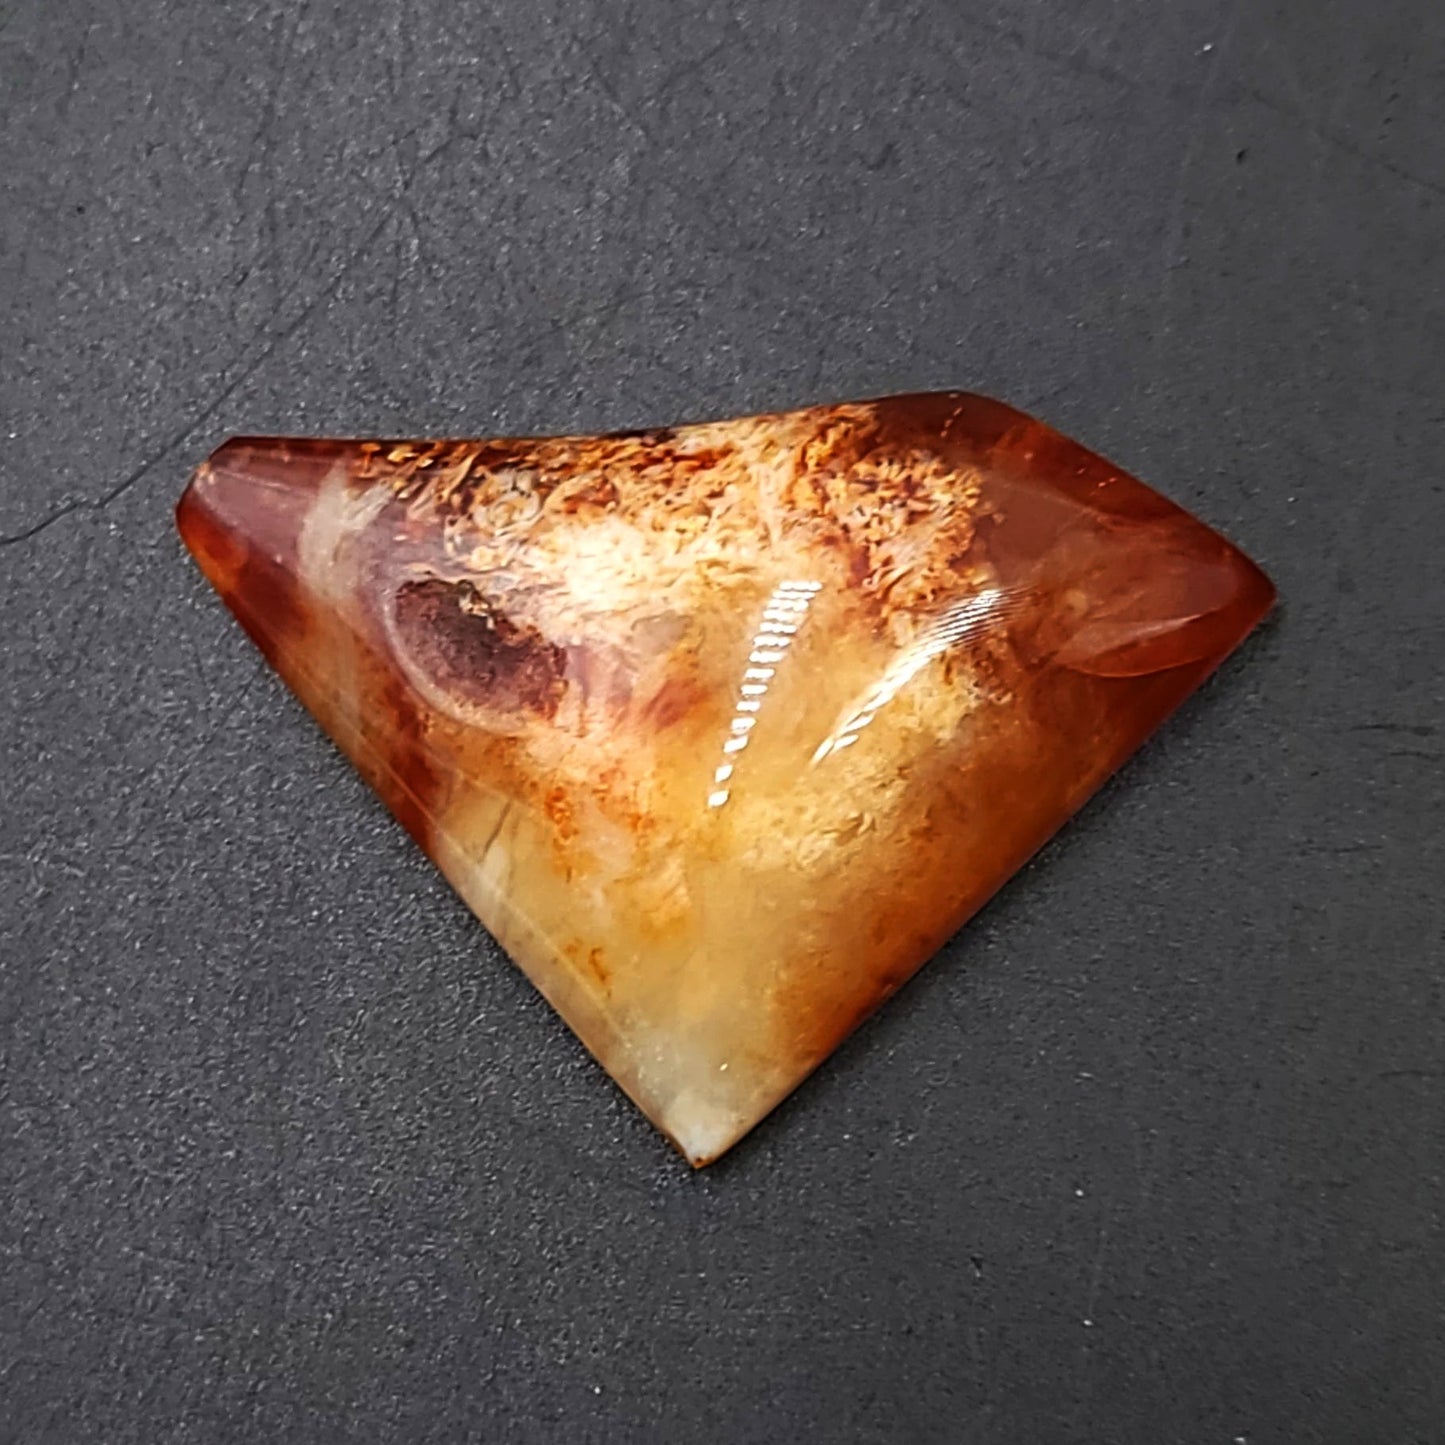 Carnelian Cabochon Free Form "Triangle" Polished Cut Stone